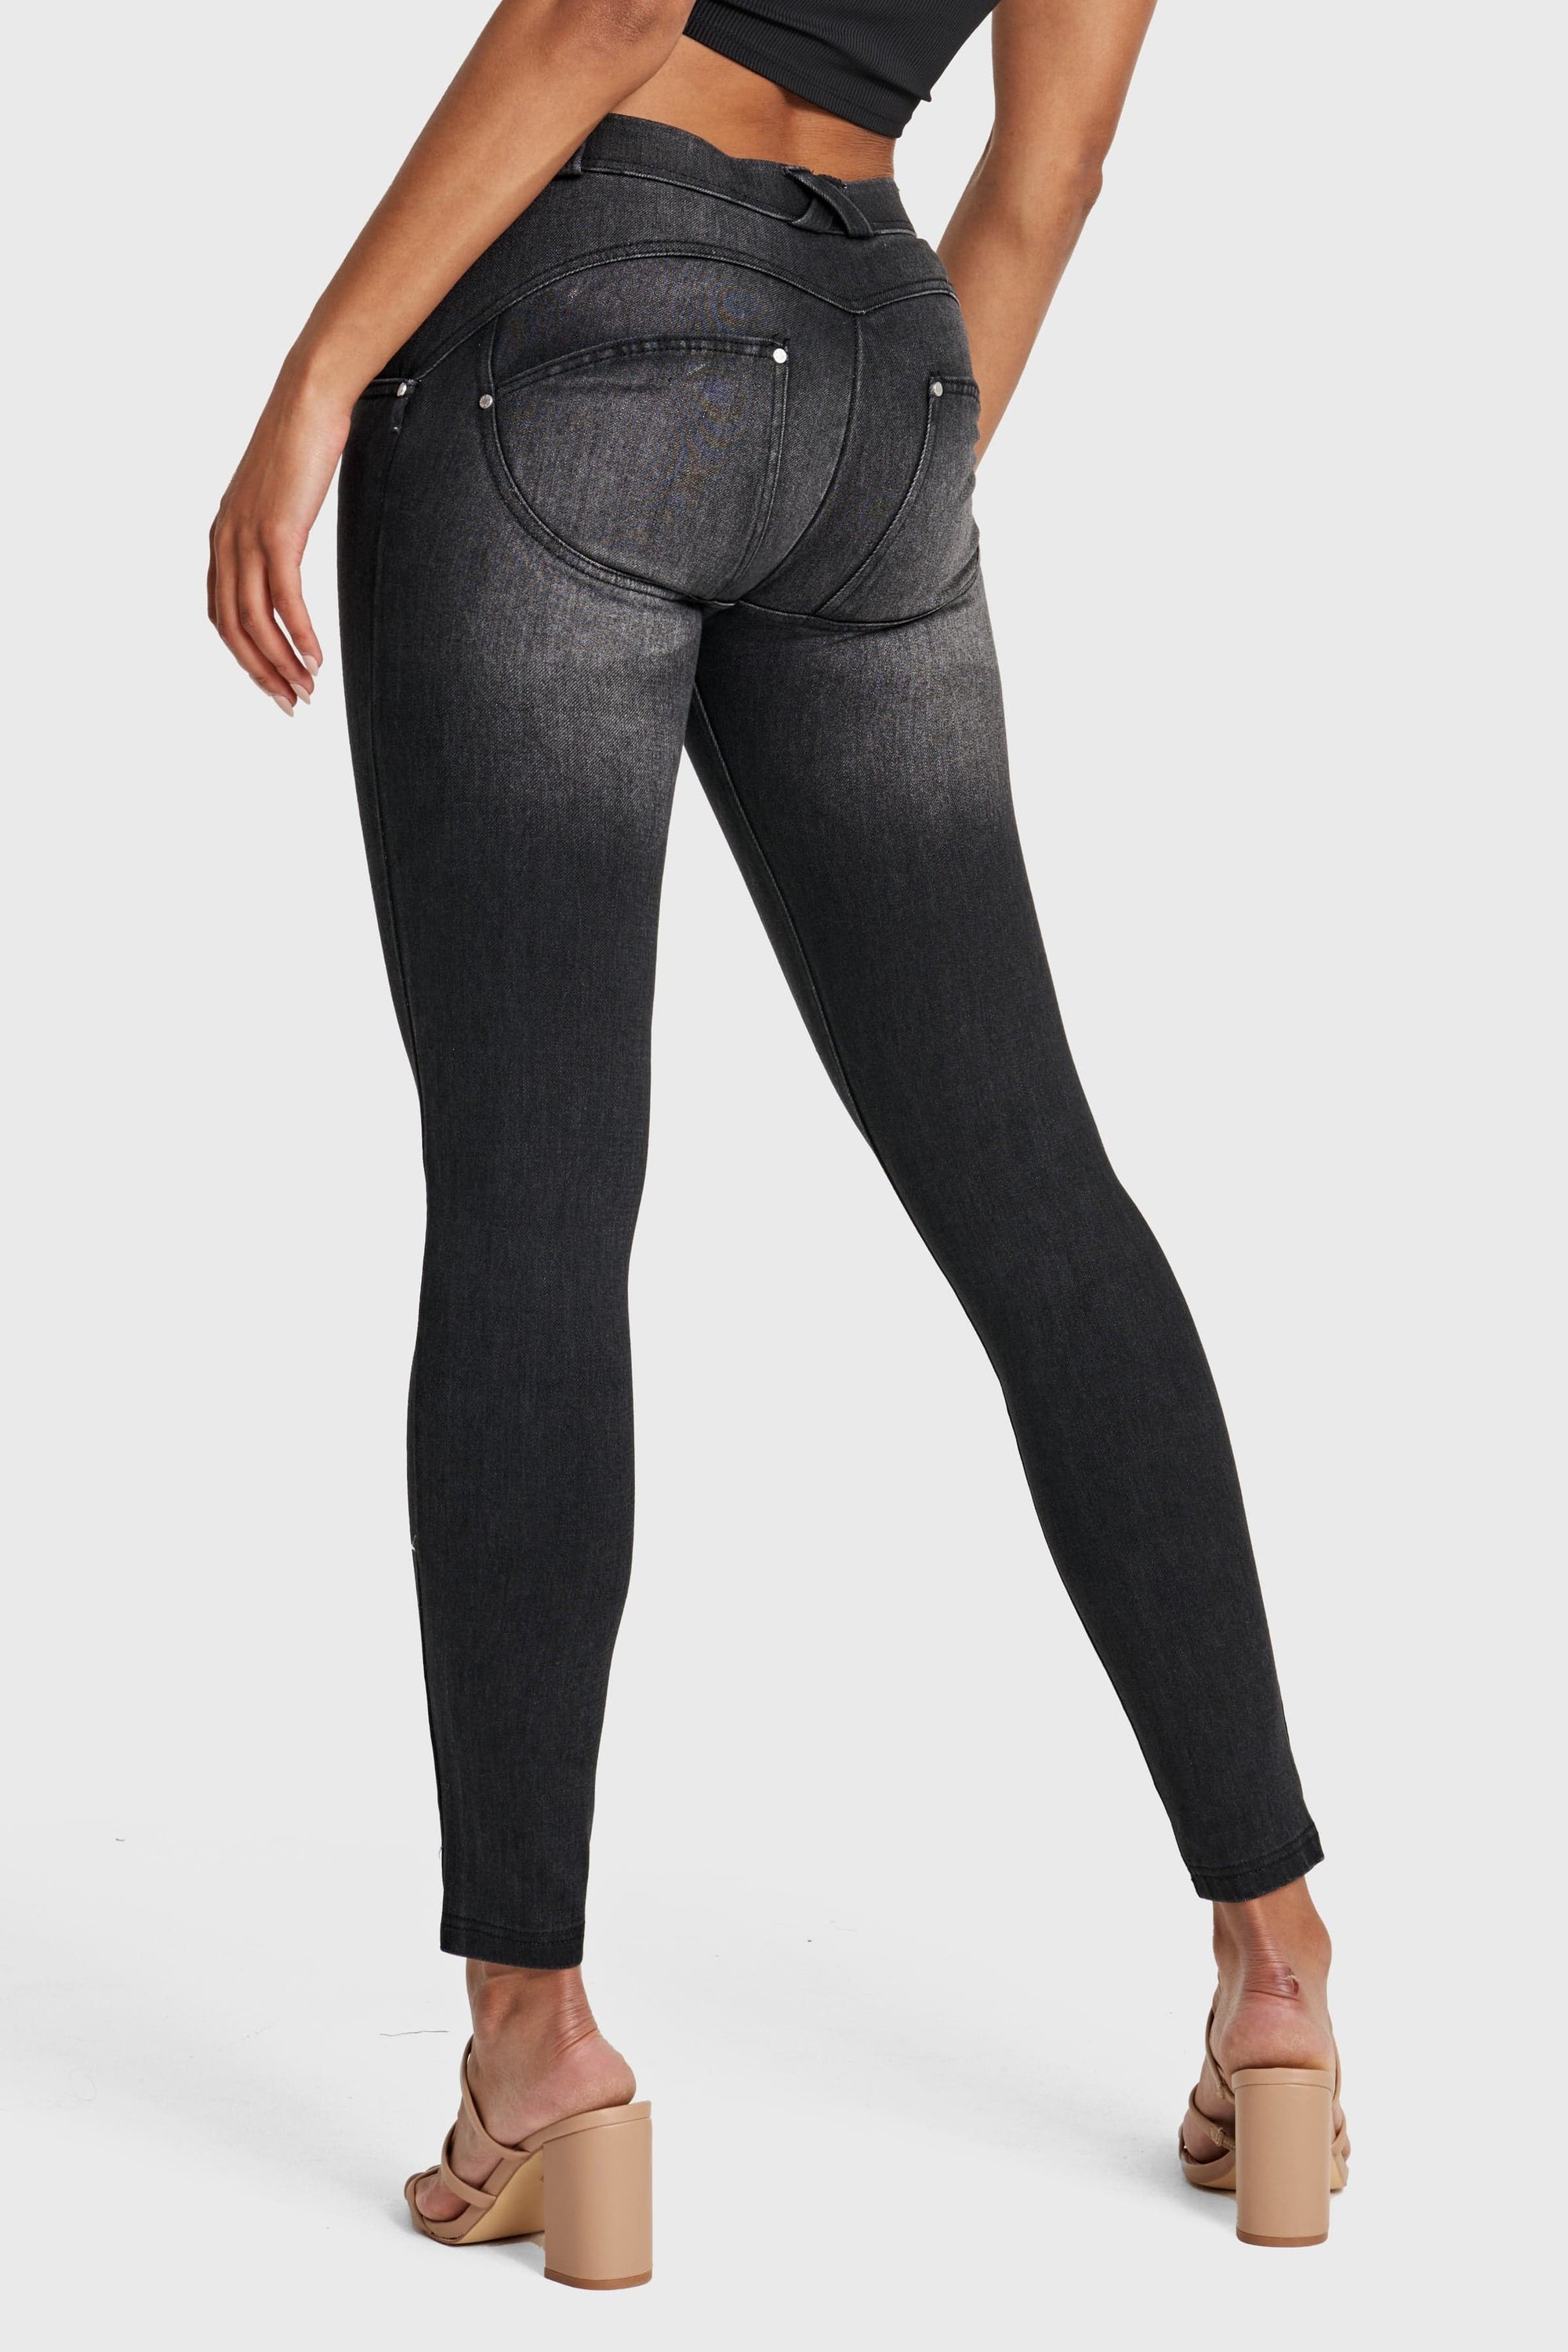 WR.UP® Snug Jeans - Mid Rise - Full Length - Black + Black Stitching 3